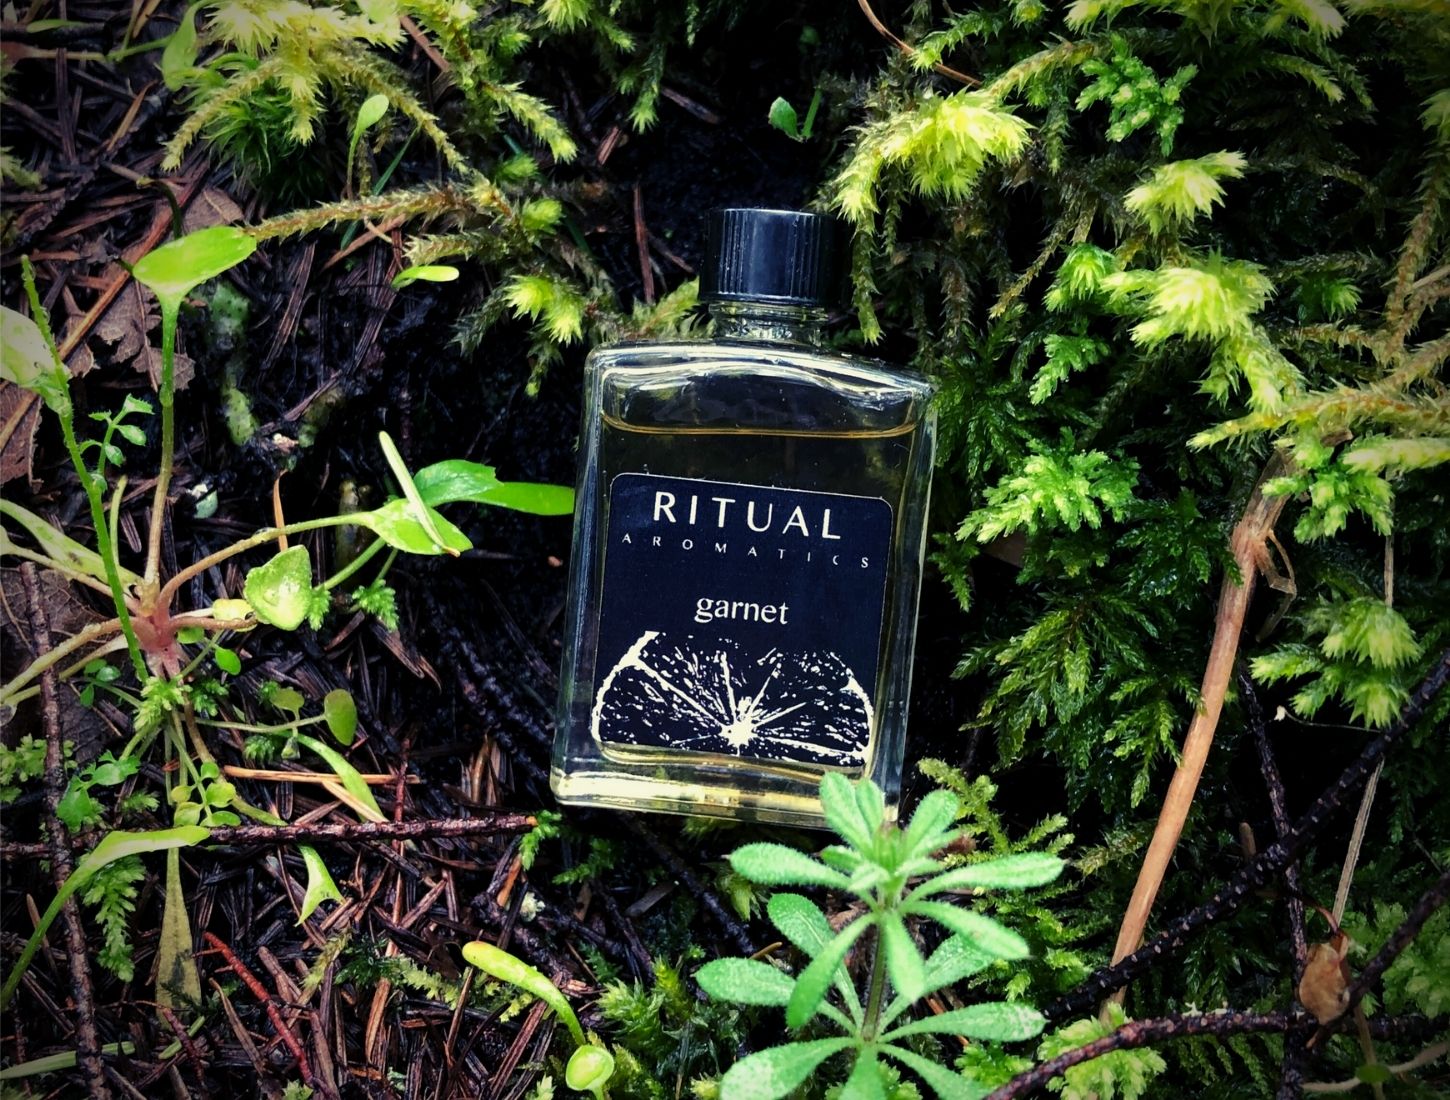 Ritual Aromatics Garnet Natural Perfume 5ml bottle outside in green moss